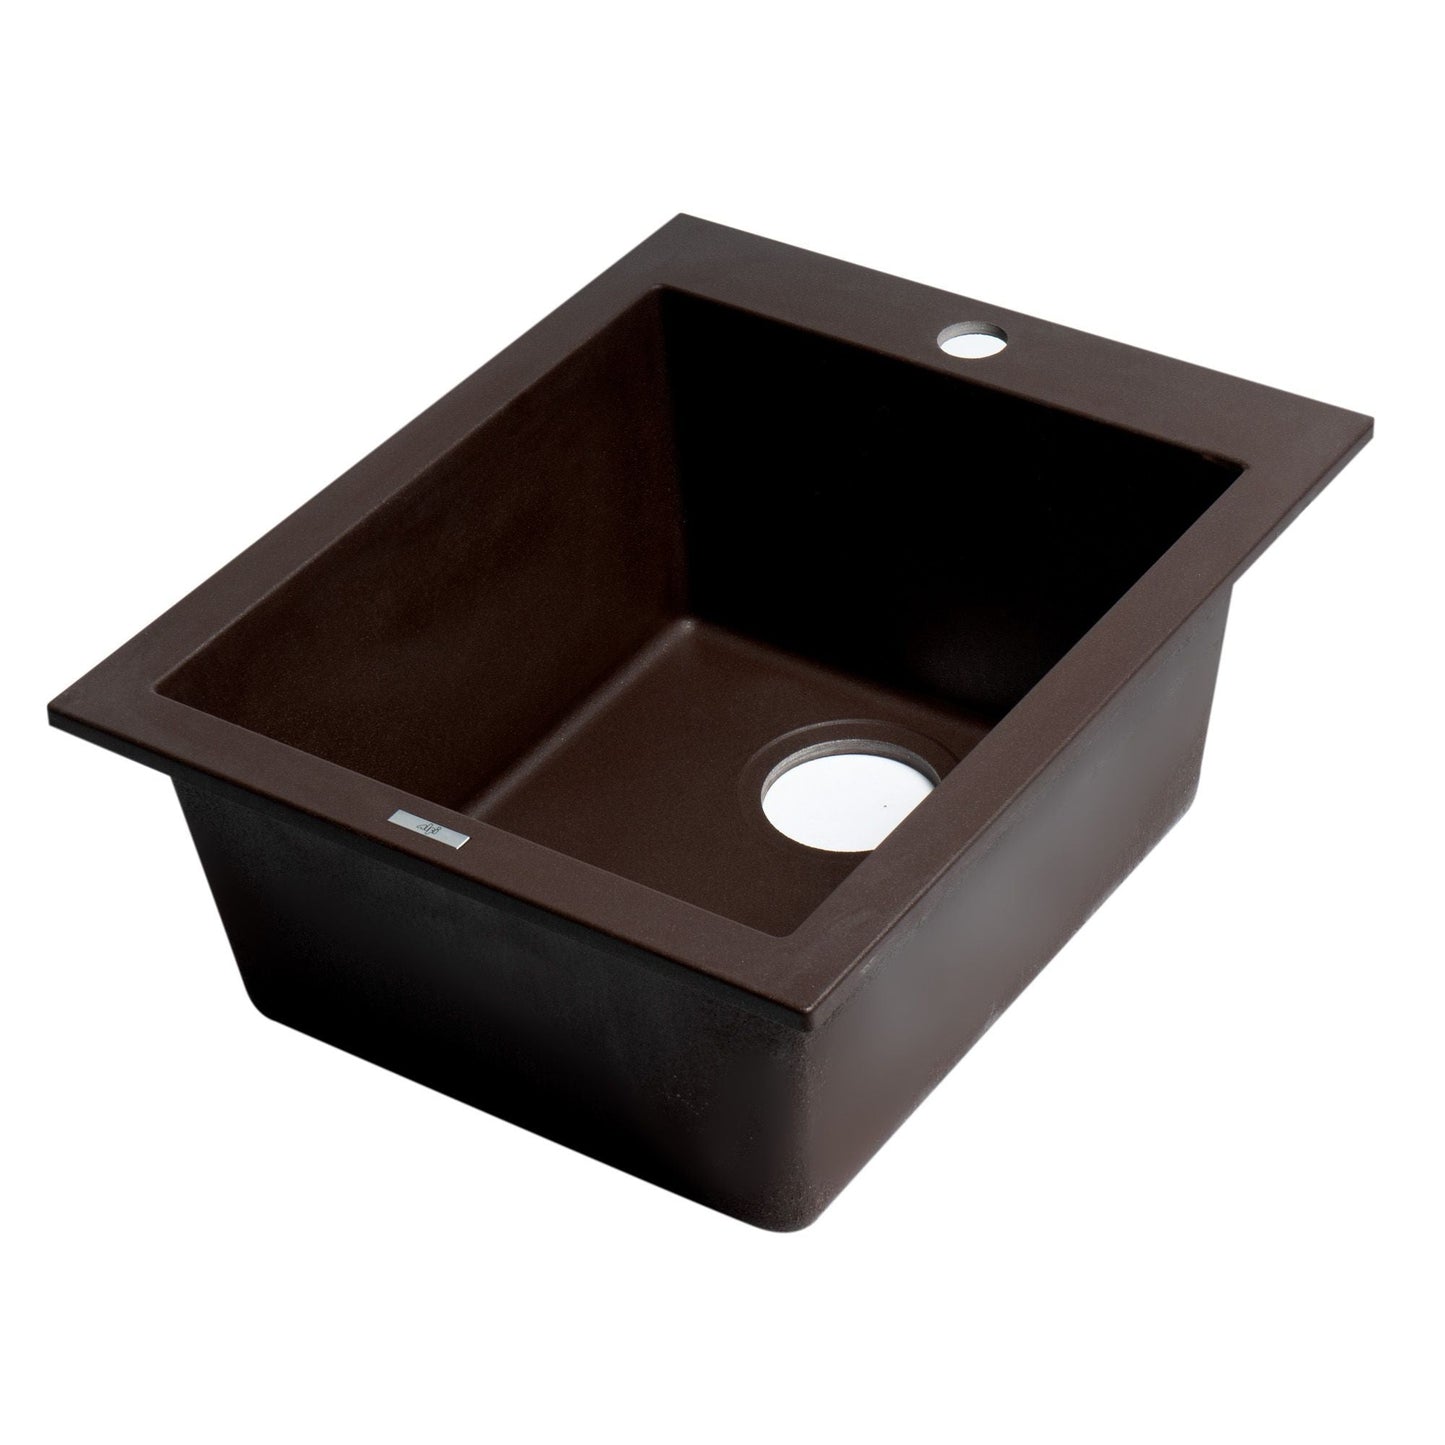 ALFI Brand AB1720DI-C Chocolate 17" Drop-In Rectangular Granite Composite Kitchen Prep Sink